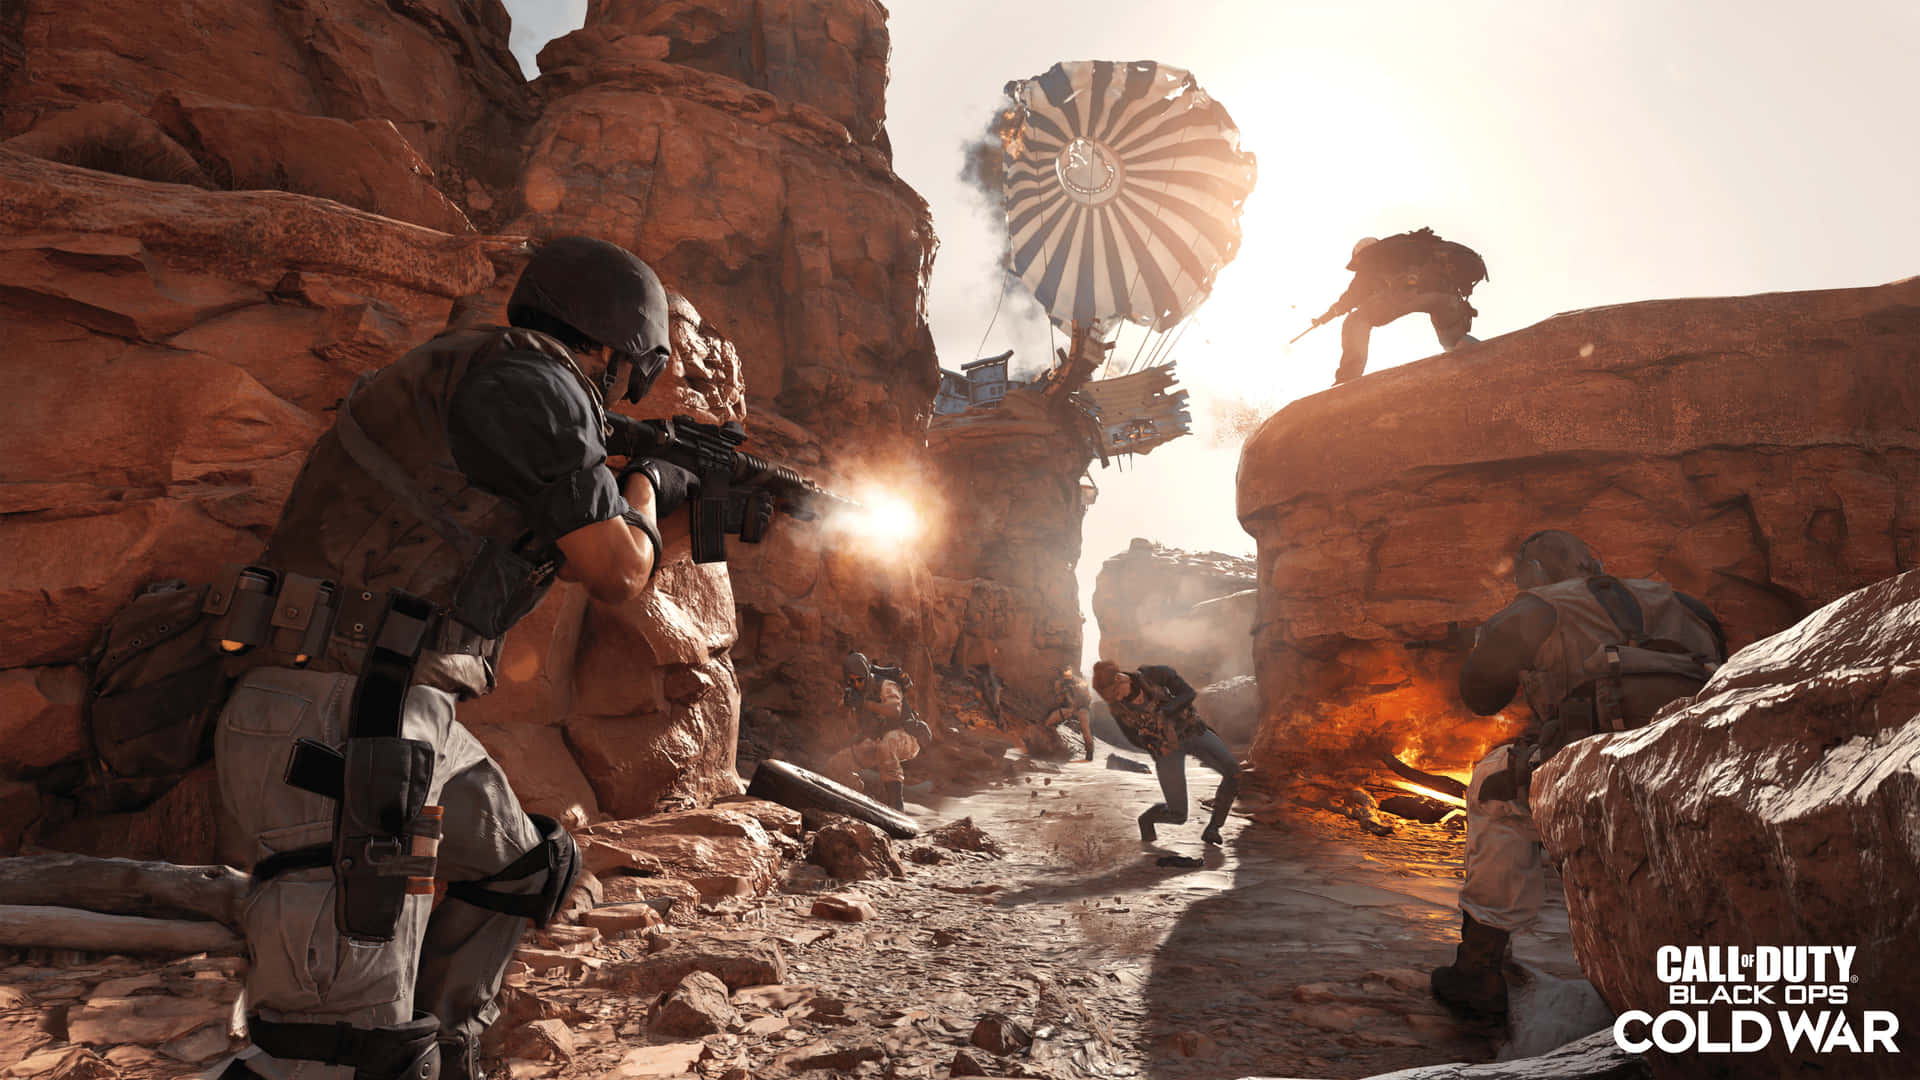 Preparatia Combattere Con Call Of Duty: Black Ops Cold War In 4k